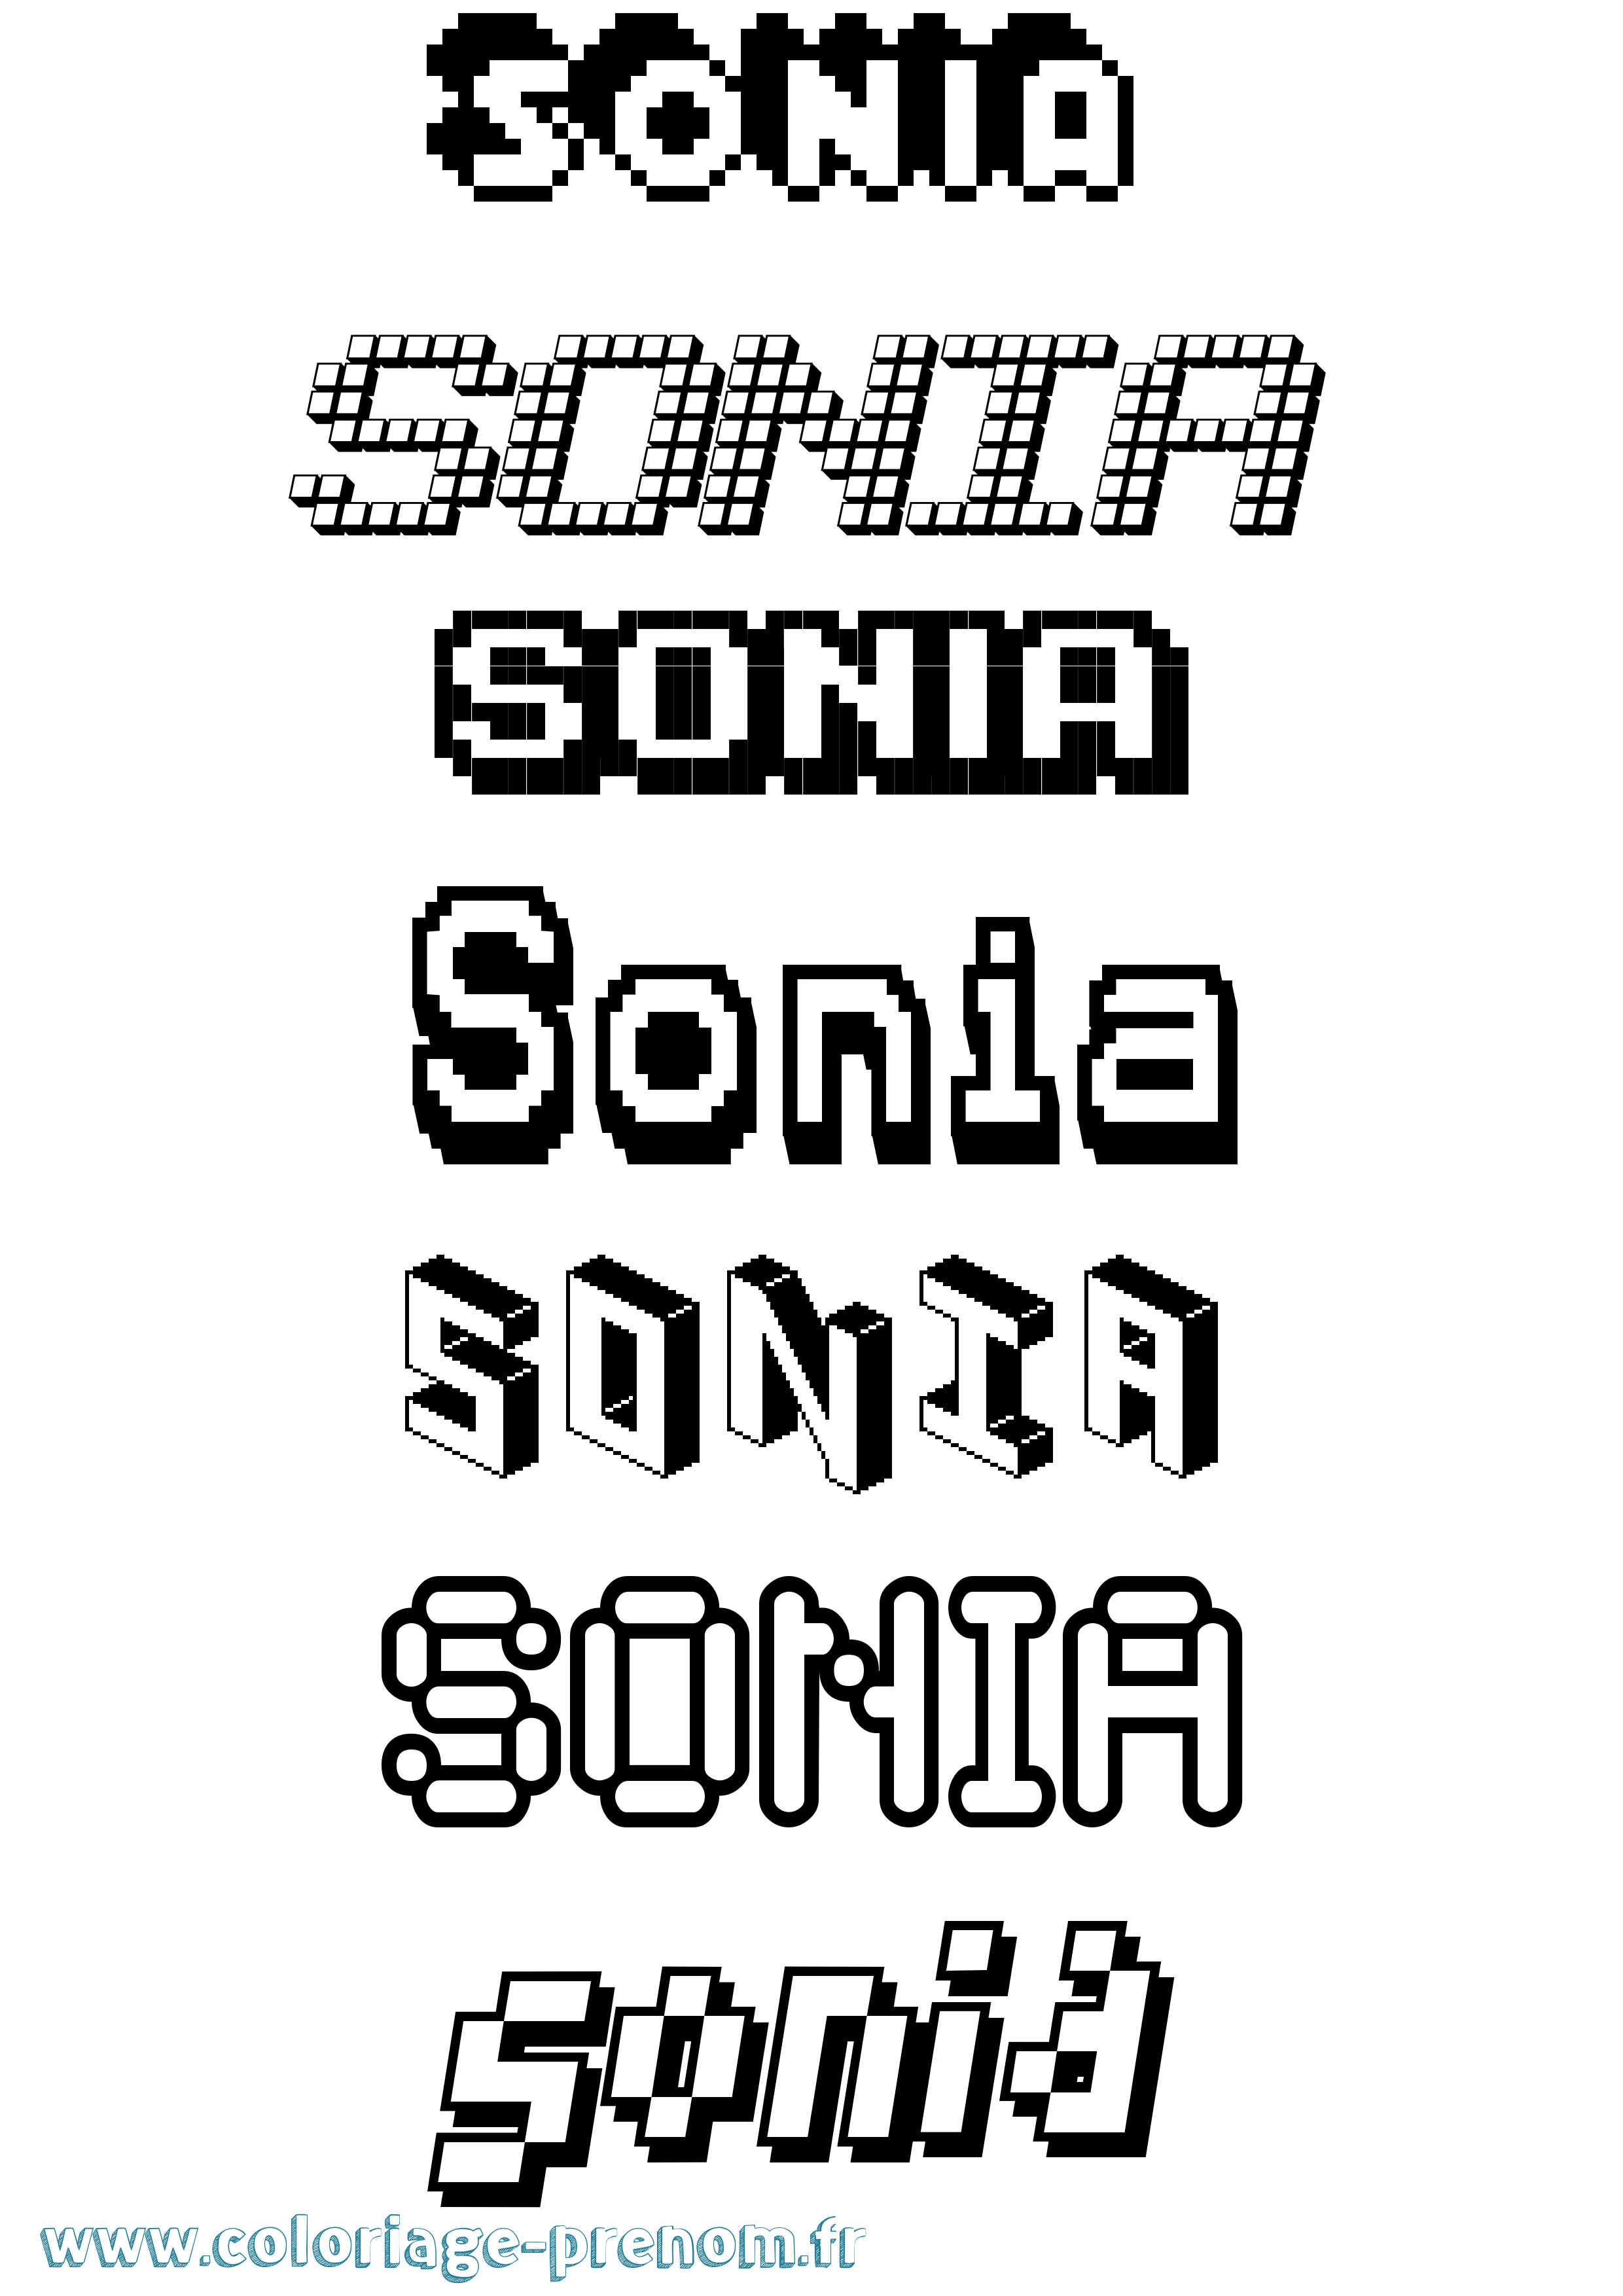 Coloriage prénom Sonia